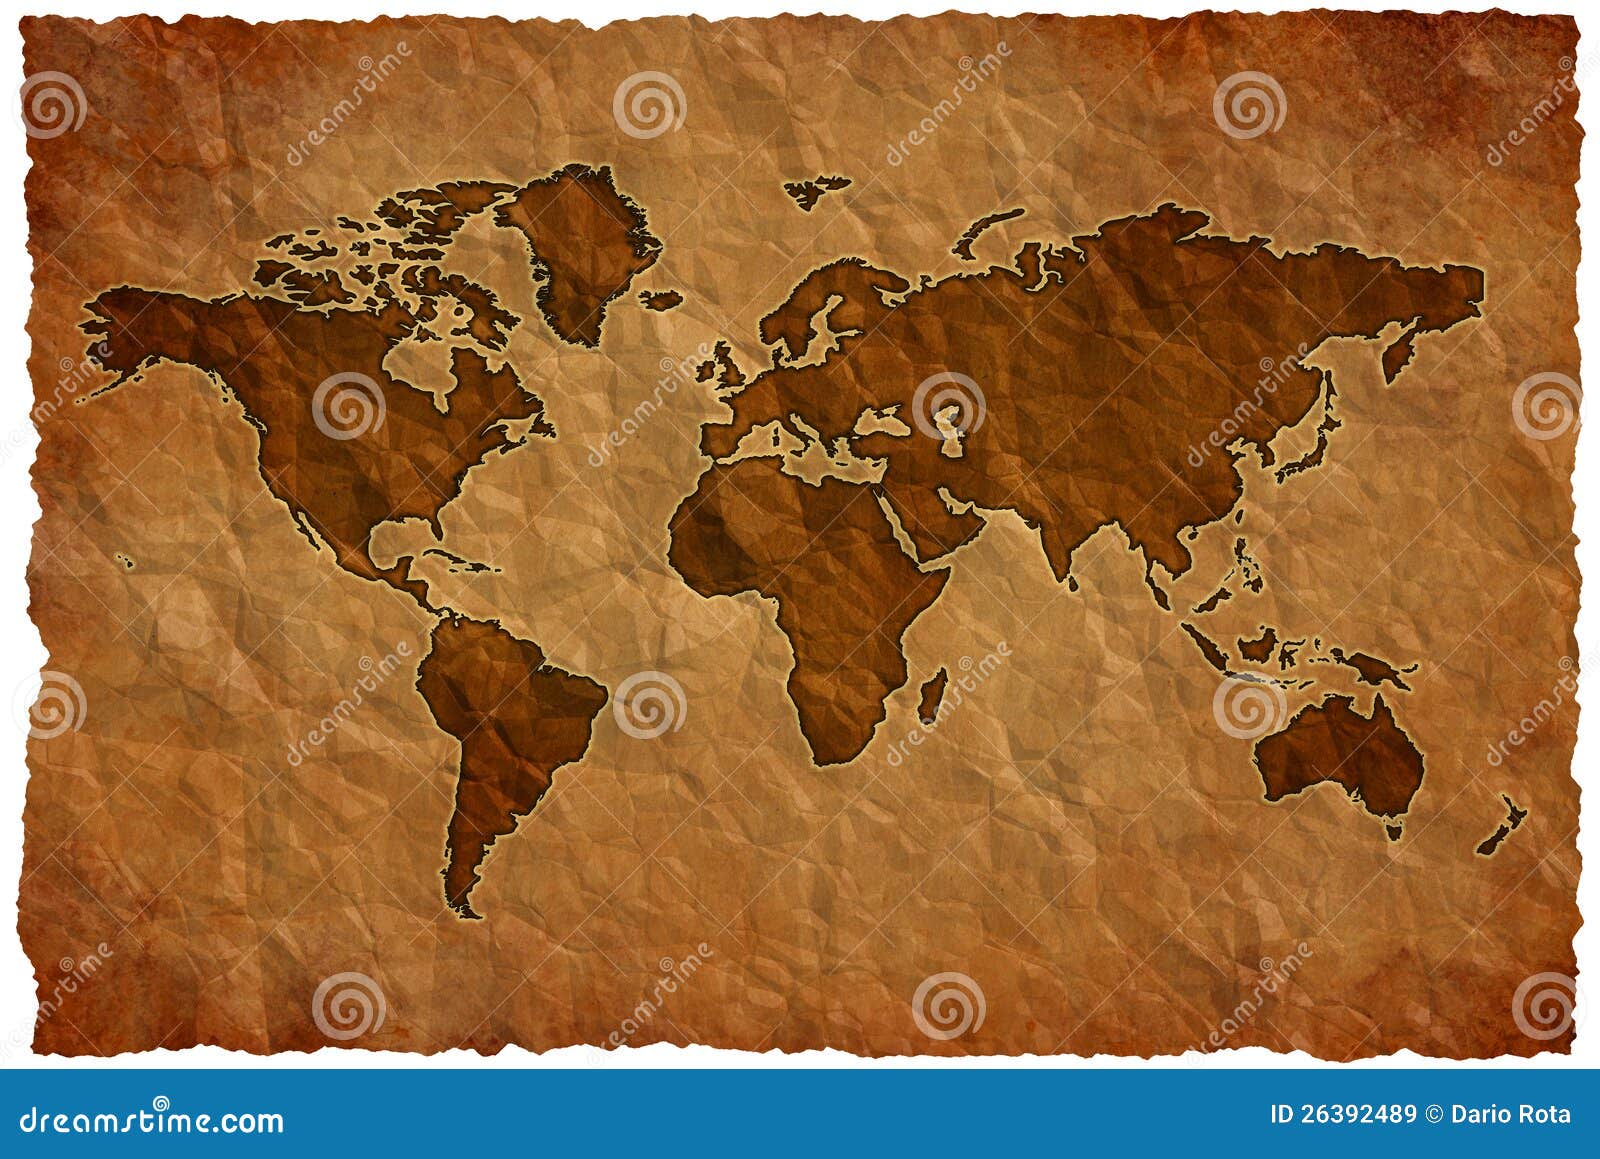 crumple paper world map